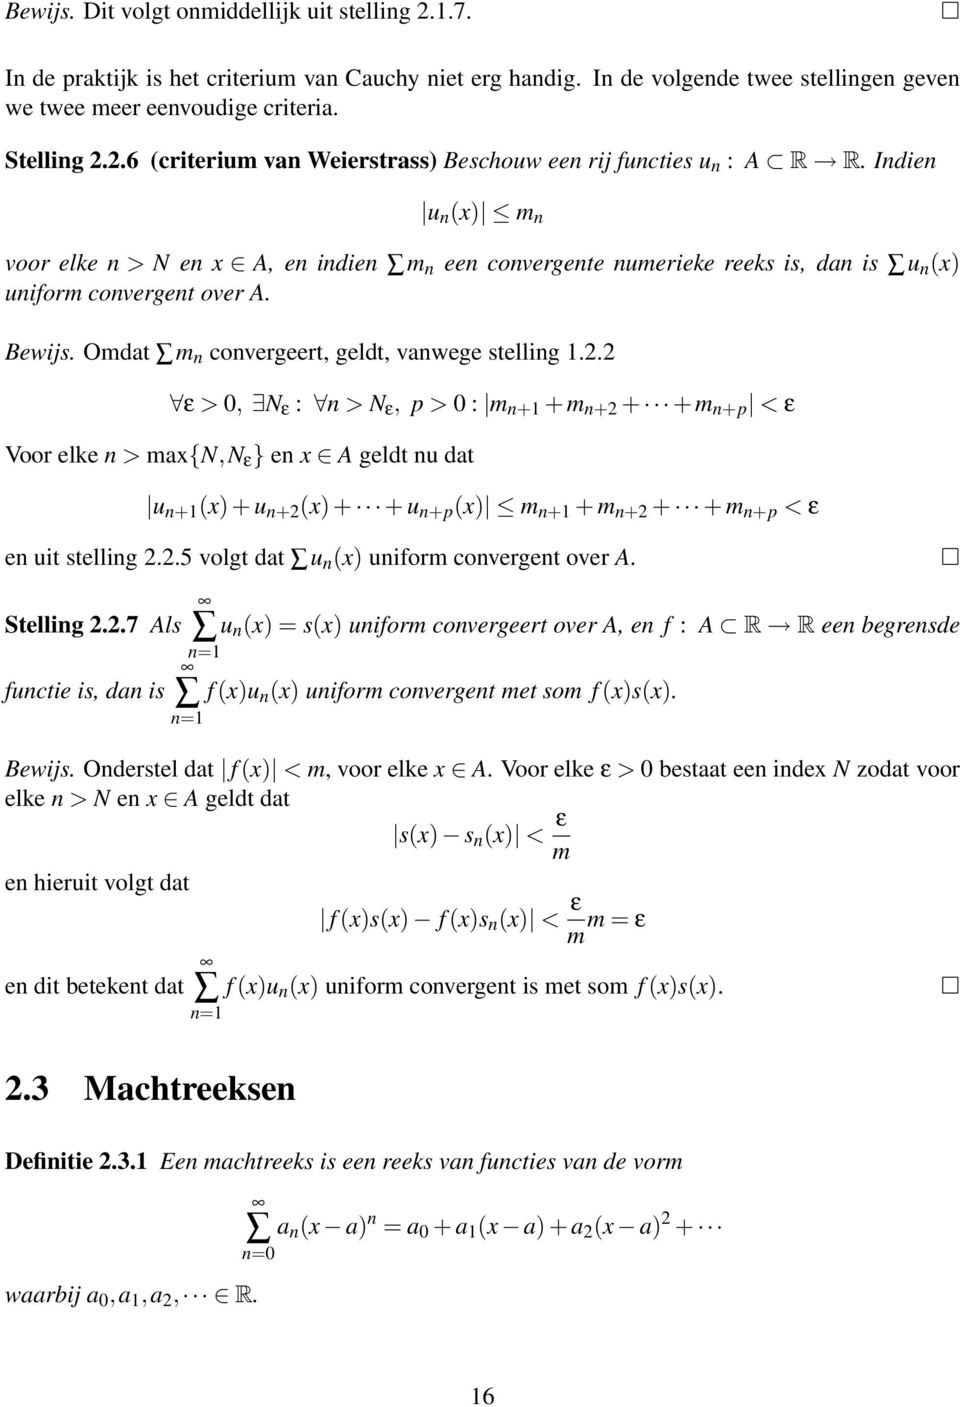 2 ε >, N ε : n > N ε, p > : m n+1 + m n+2 + + m n+p < ε Voor elke n > max{n,n ε } en x A geldt nu dat u n+1 (x) + u n+2 (x) + + u n+p (x) m n+1 + m n+2 + + m n+p < ε en uit stelling 2.2.5 volgt dat u n (x) uniform convergent over A.